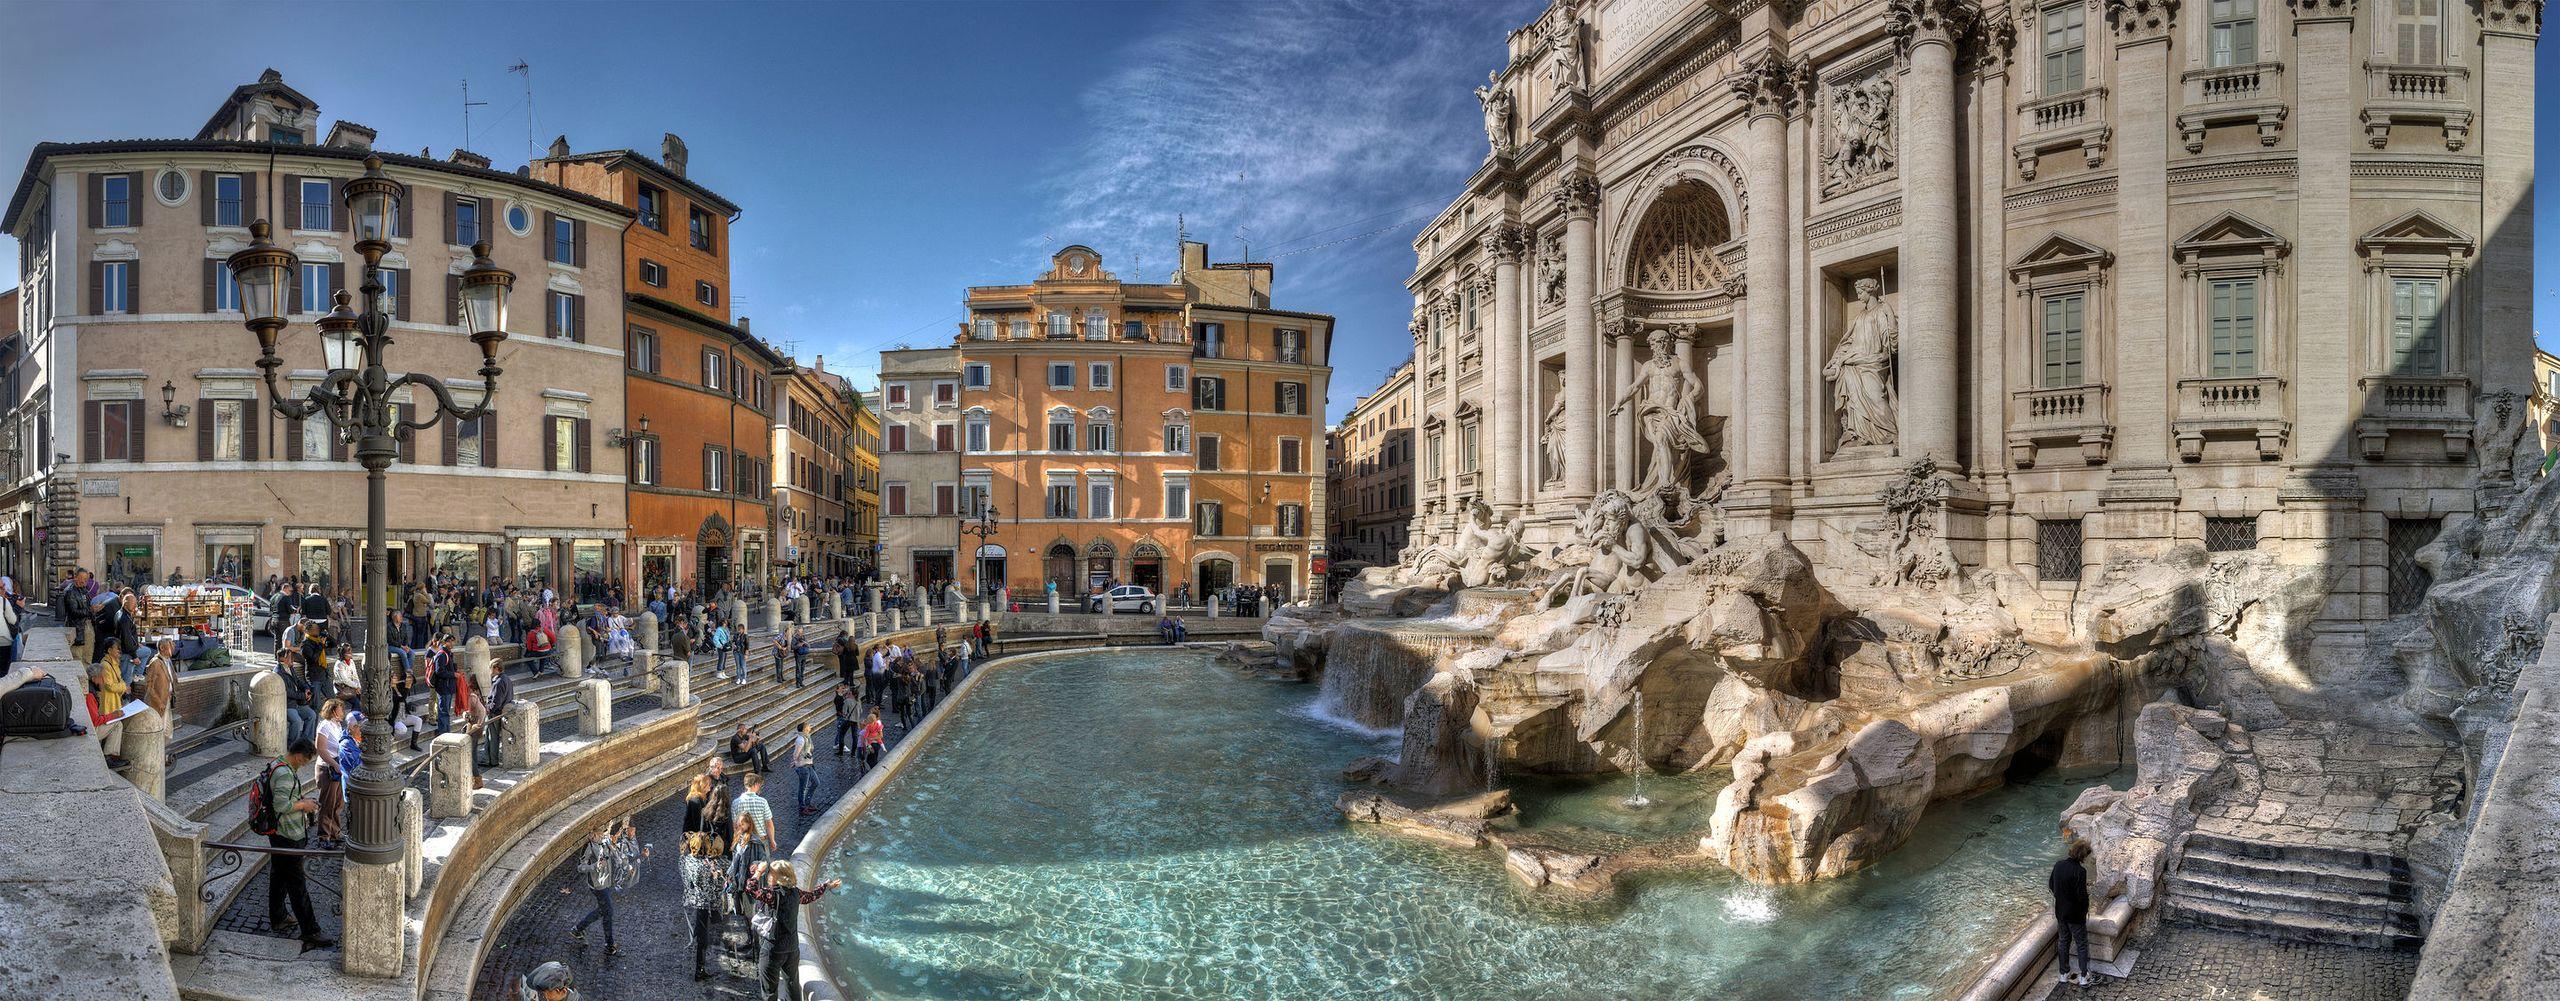 fontana di trevi τουρίστες σε ένα από τα όμορφα συντριβάνια της Ρώμης